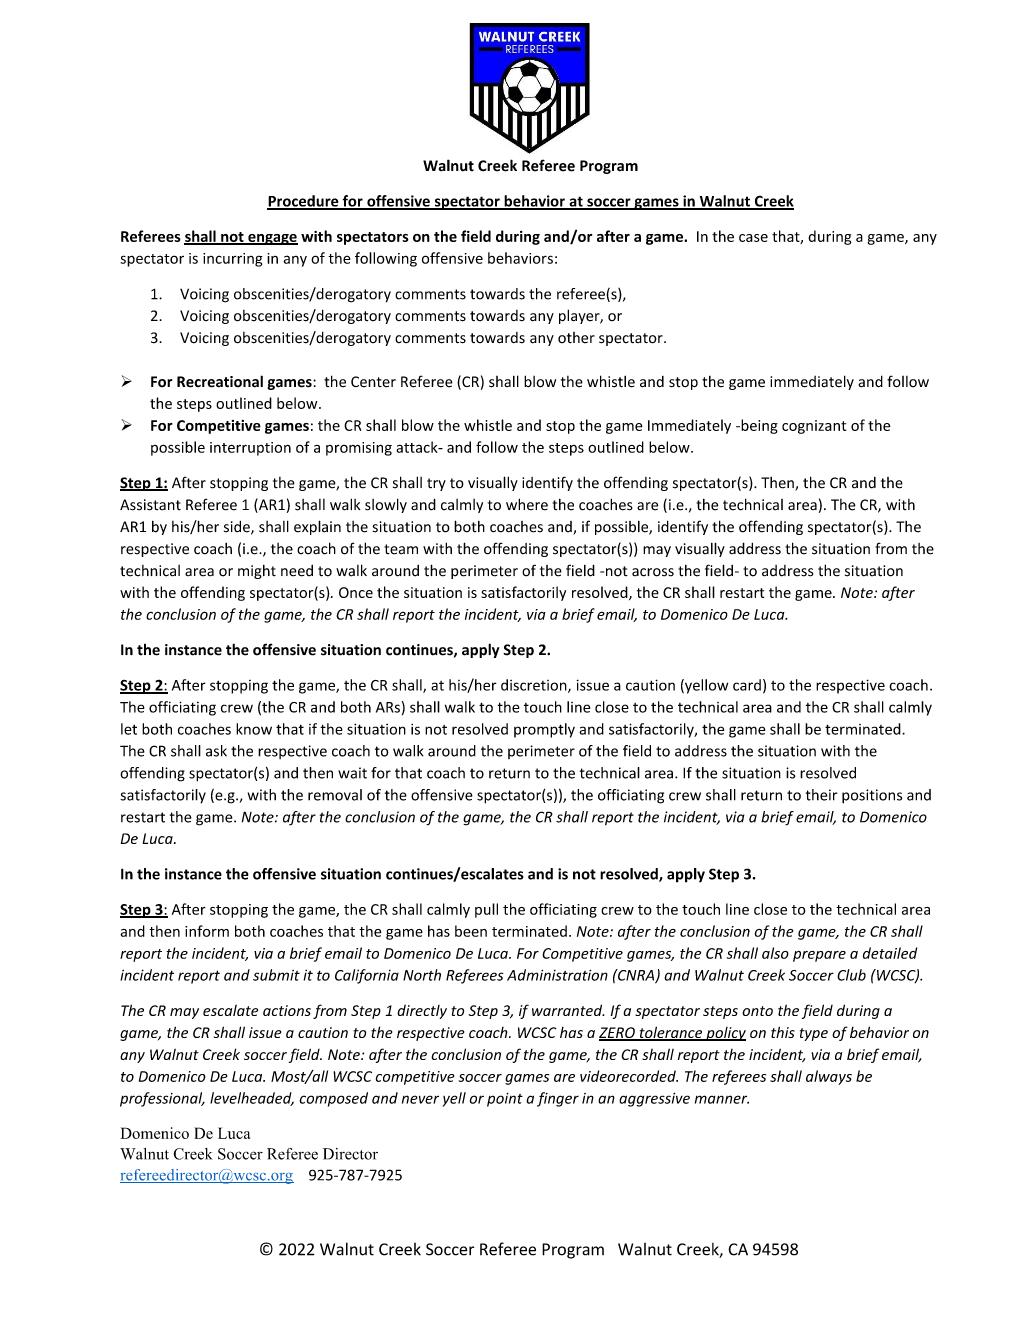 Walnut Creek Referee Procedure for offensive spectator behavior at soccer games in Walnut Creek 2022 DD